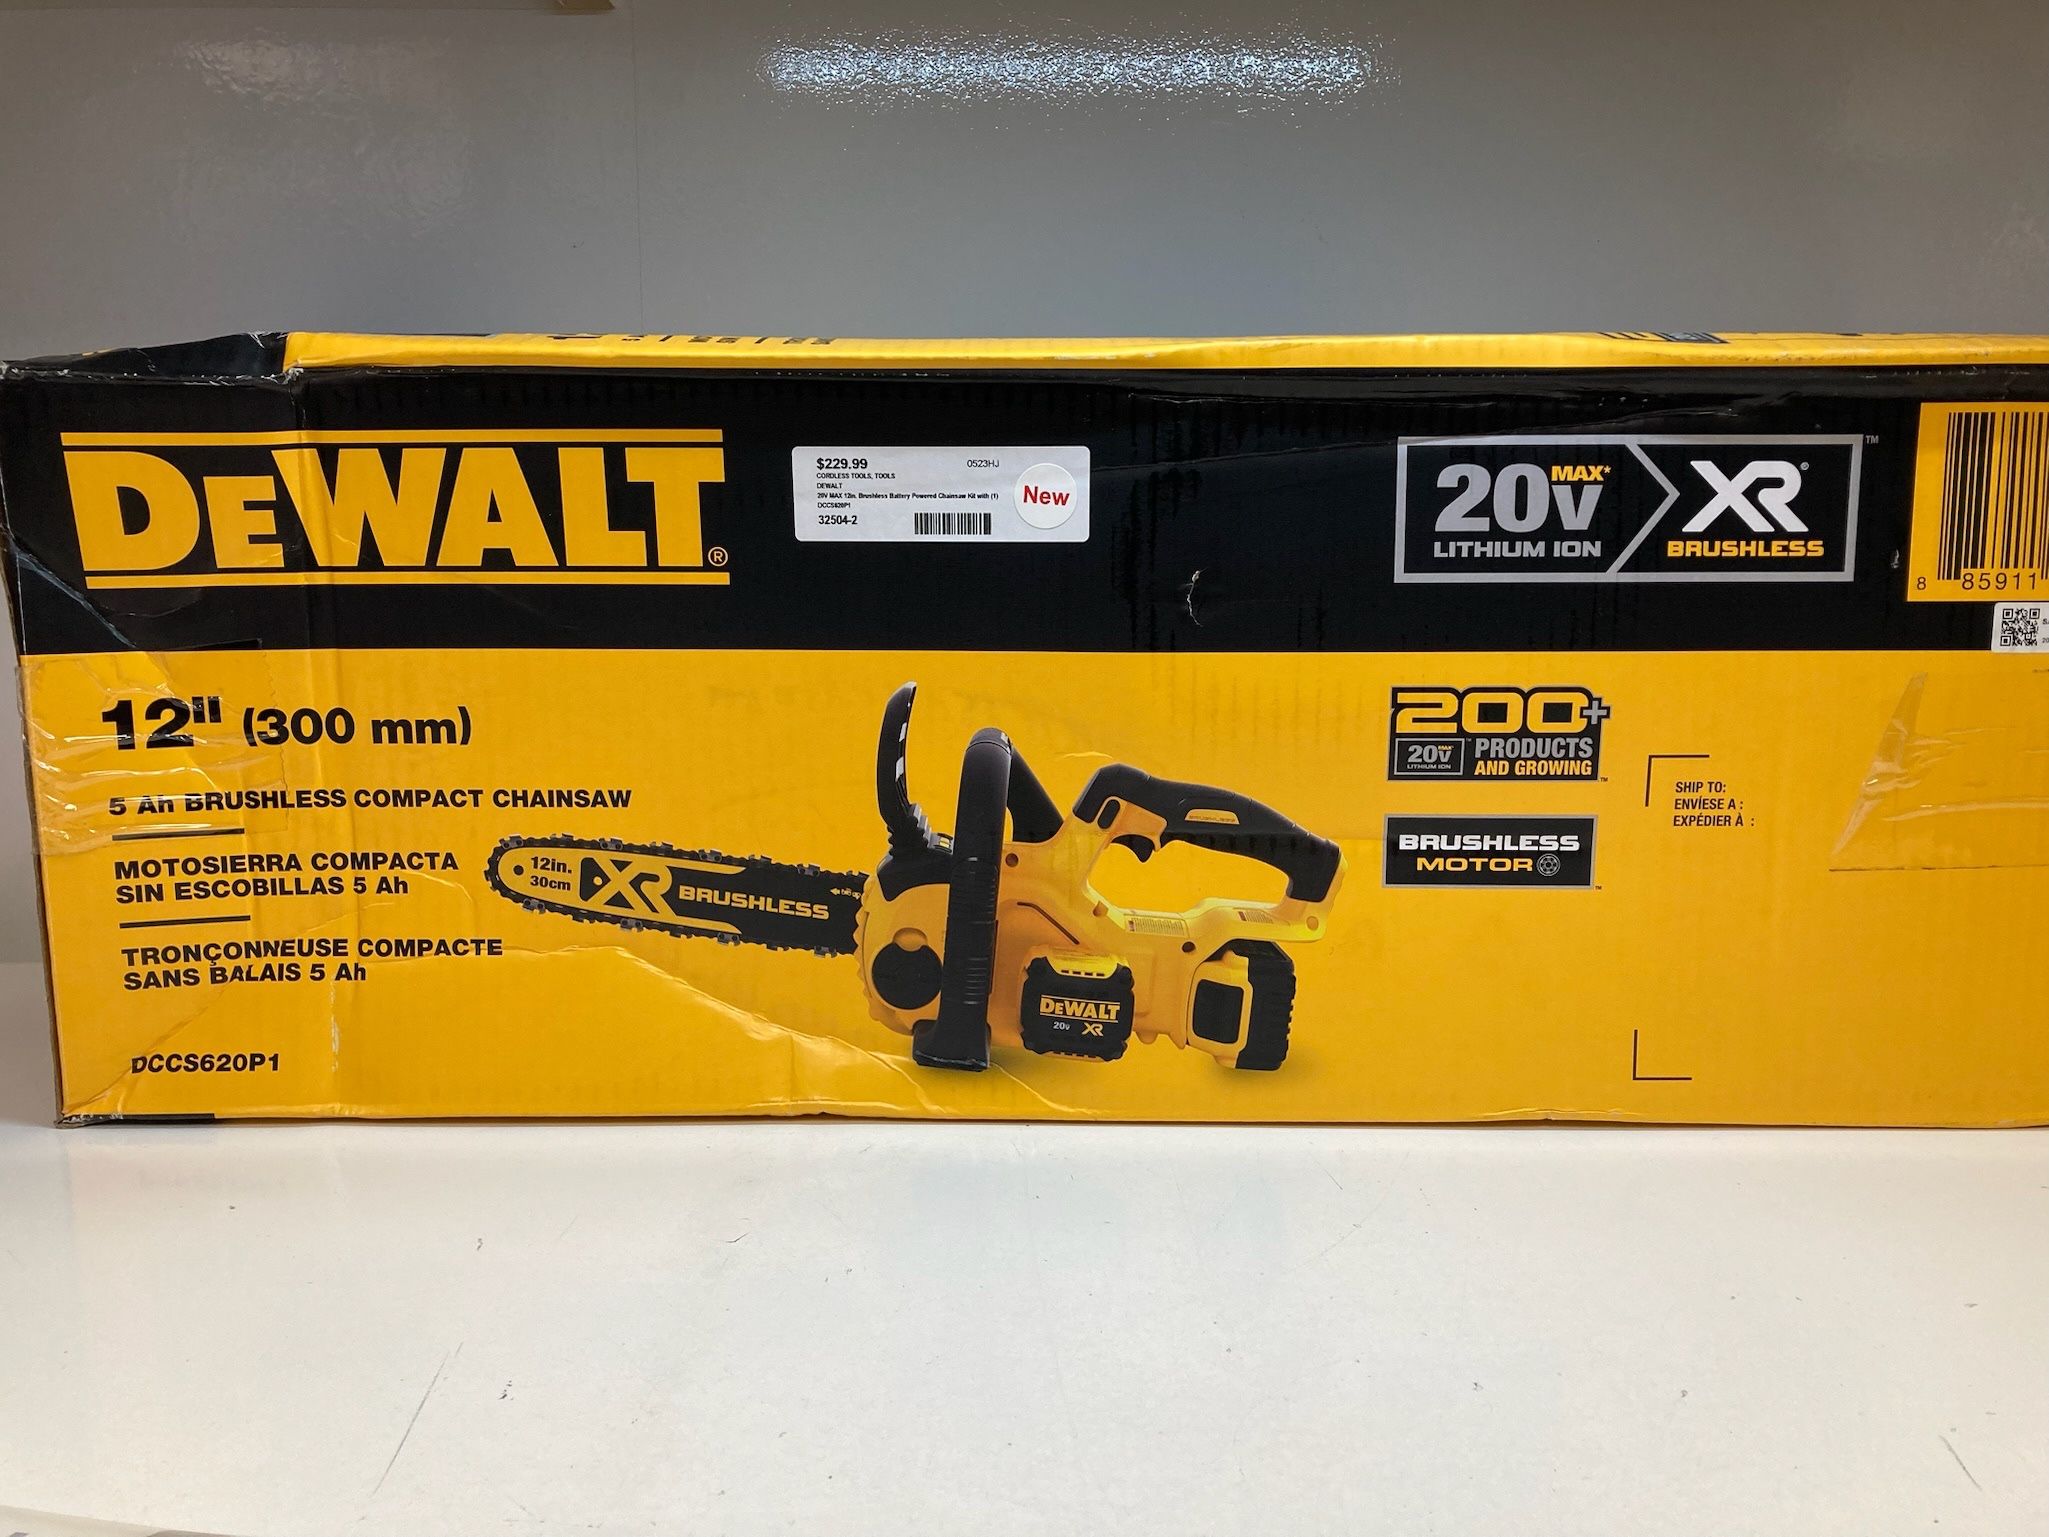 DEWALT DCCS620P1 20V MAX 12” Brushless Battery Powered Chainsaw Kit